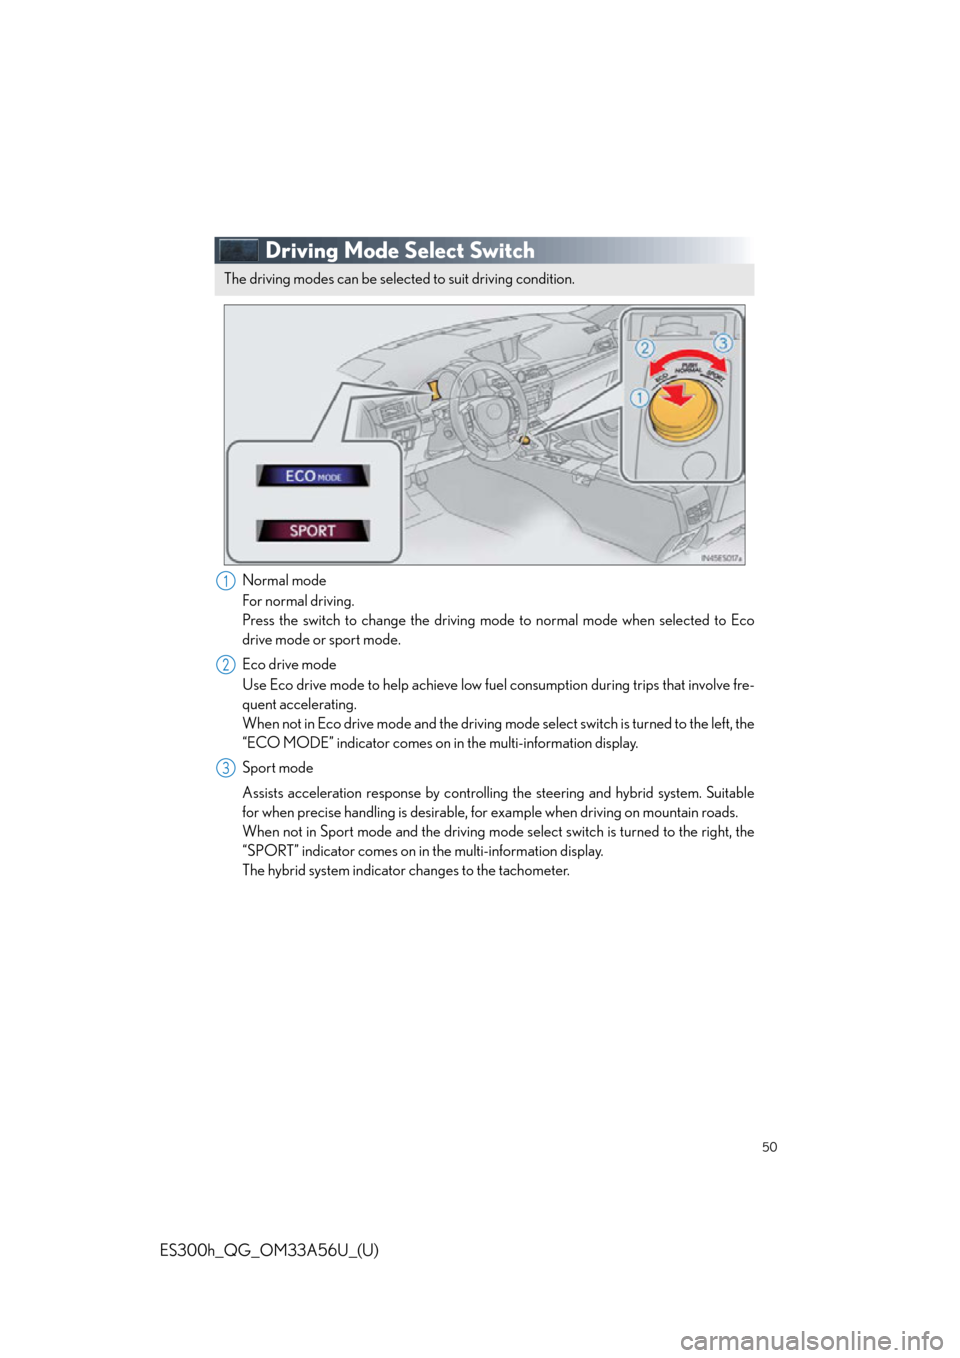 Lexus ES300h 2013  2013-2015 ES350/300h TVIP V4 Remote Engine Starter (RES) Owners /  Quick Guide (OM33A56U) Service Manual 50
ES300h_QG_OM33A56U_(U)
Driving Mode Select Switch
Normal mode
For normal driving.
Press the switch to change the driving mode to normal mode when selected to Eco
drive mode or sport mode.
Eco drive